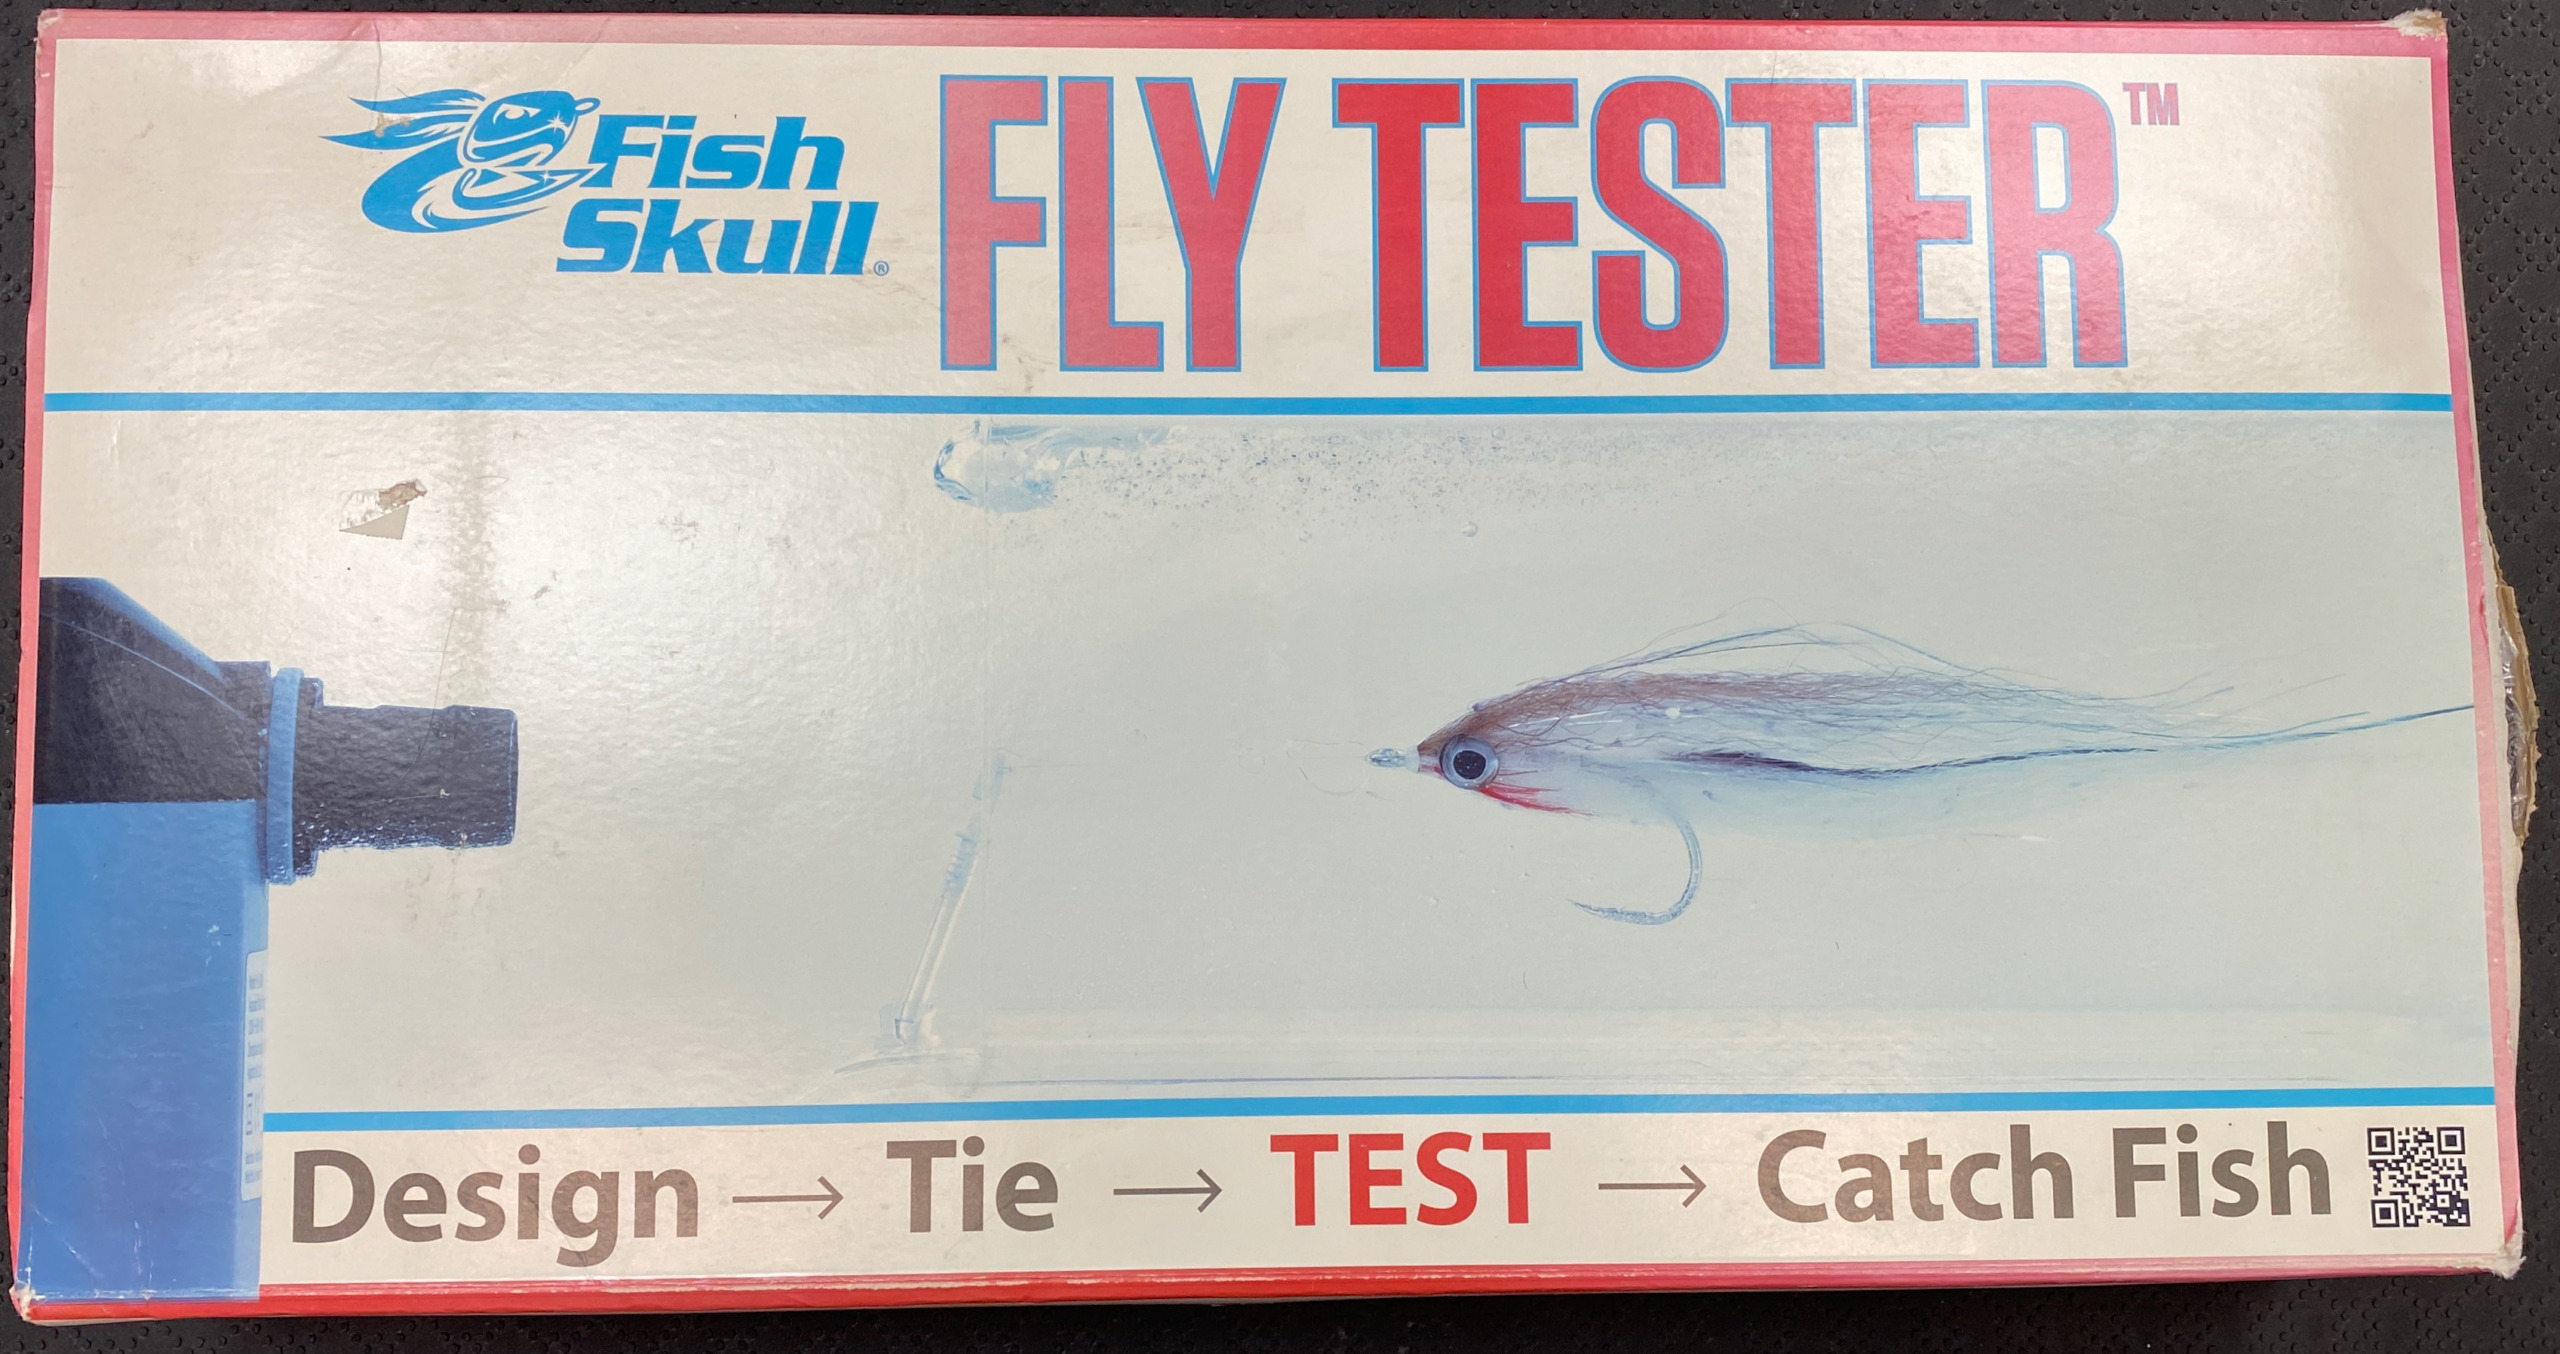 Fish Skull Fly Tester Fly Swim Tank - Version #1 - NEW IN BOX! - $150